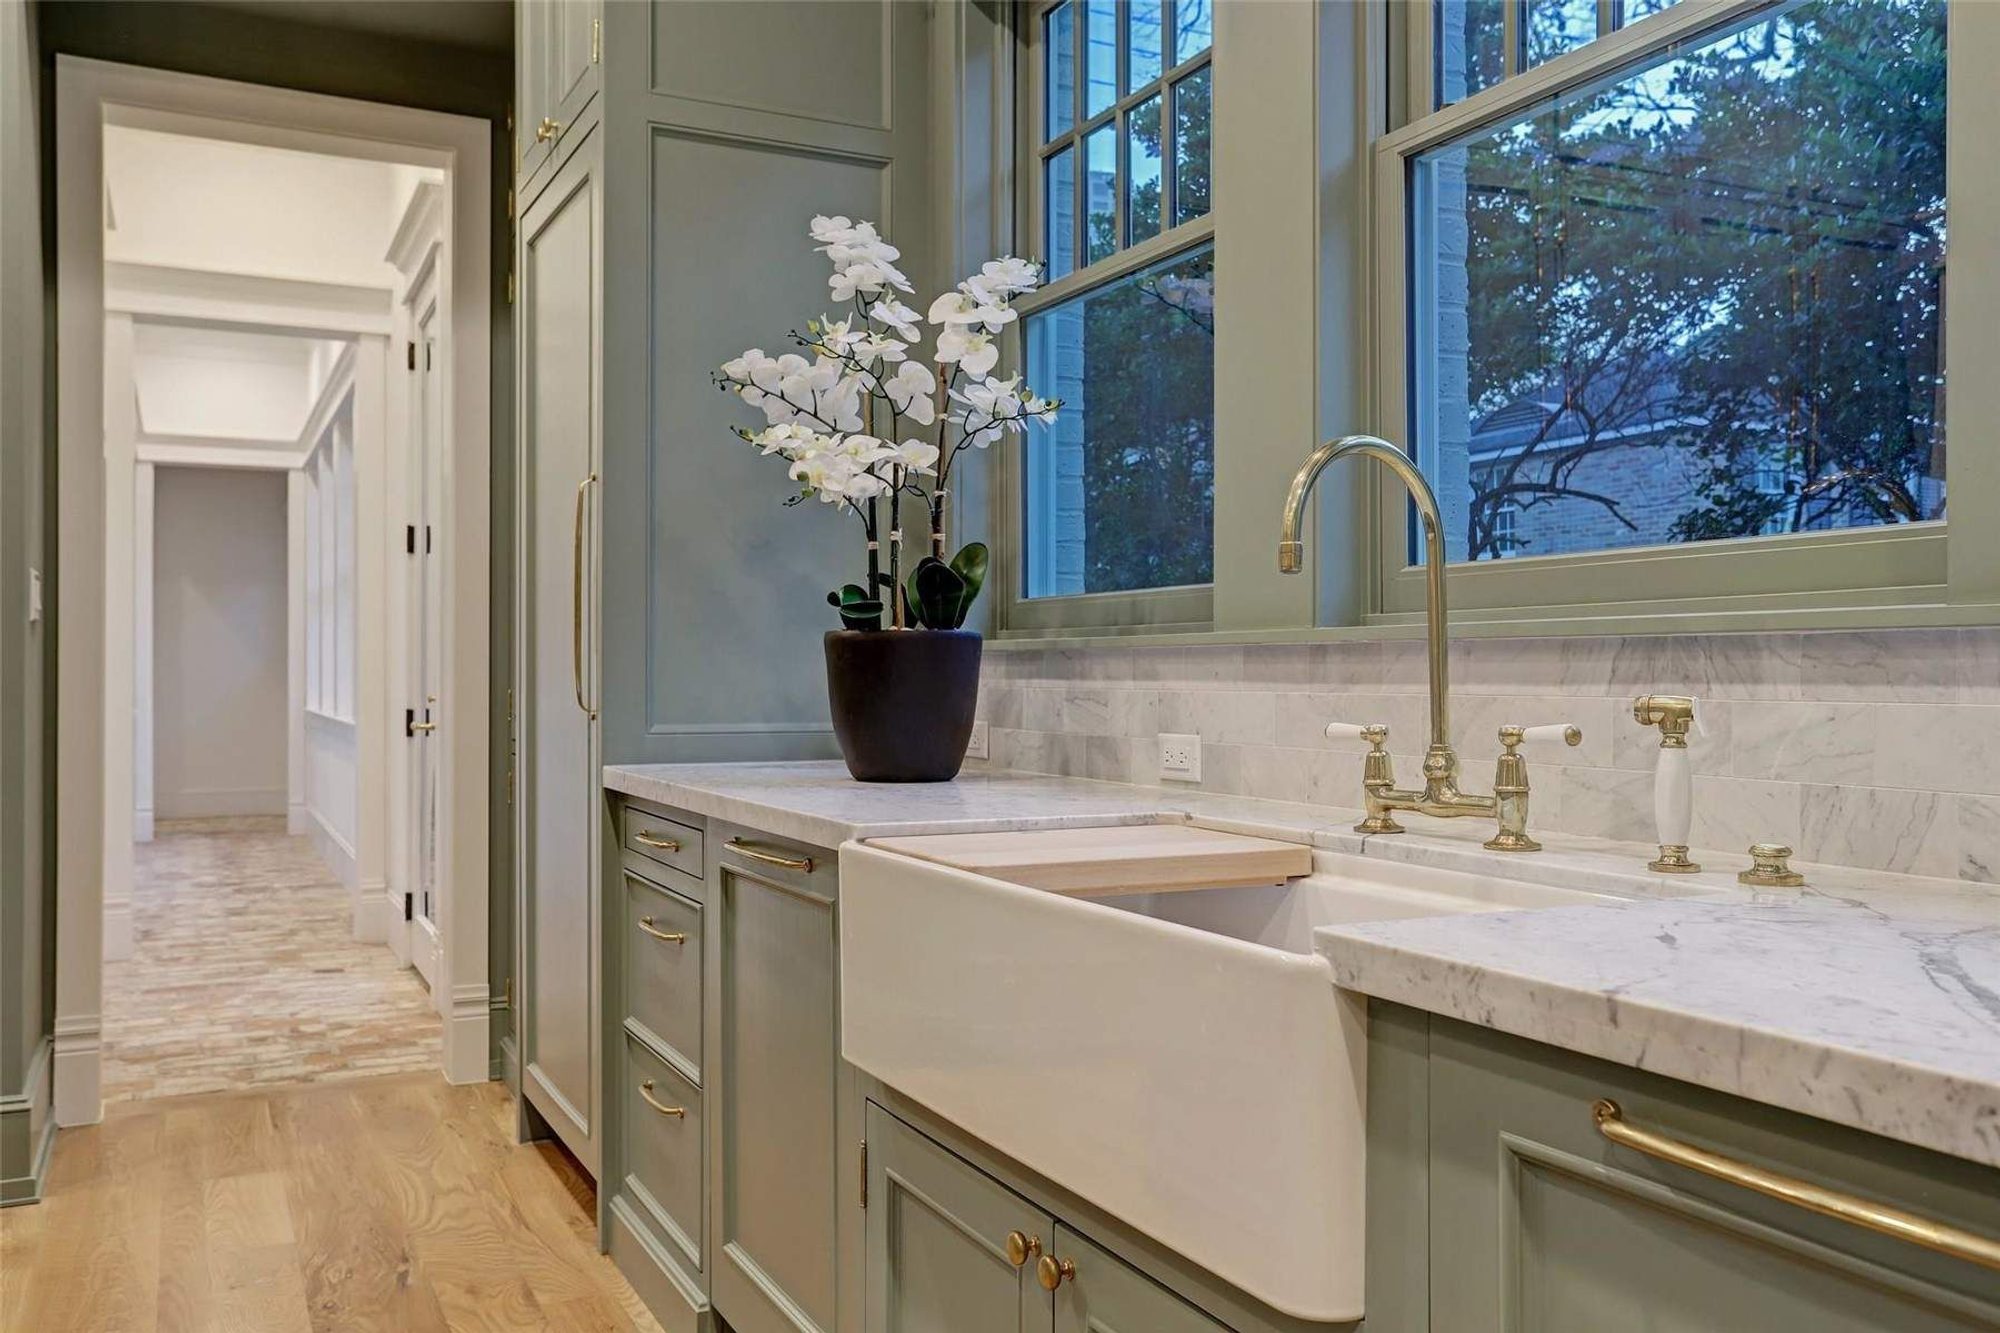 Large farmhouse style single basin white enamel kitchen sink with exposed apron.